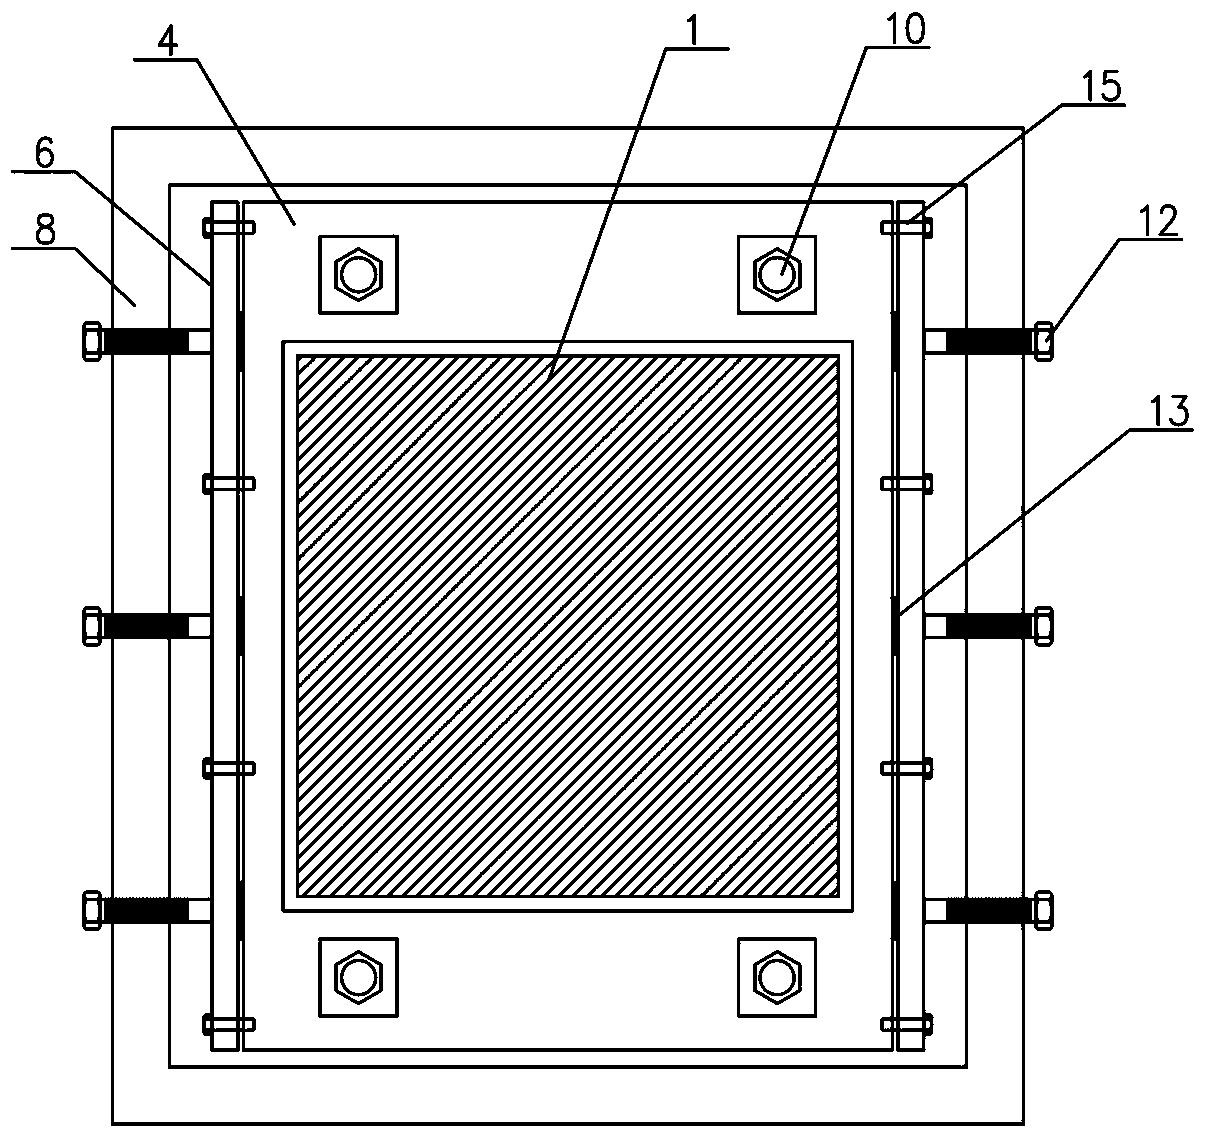 An anti-slip plate bearing